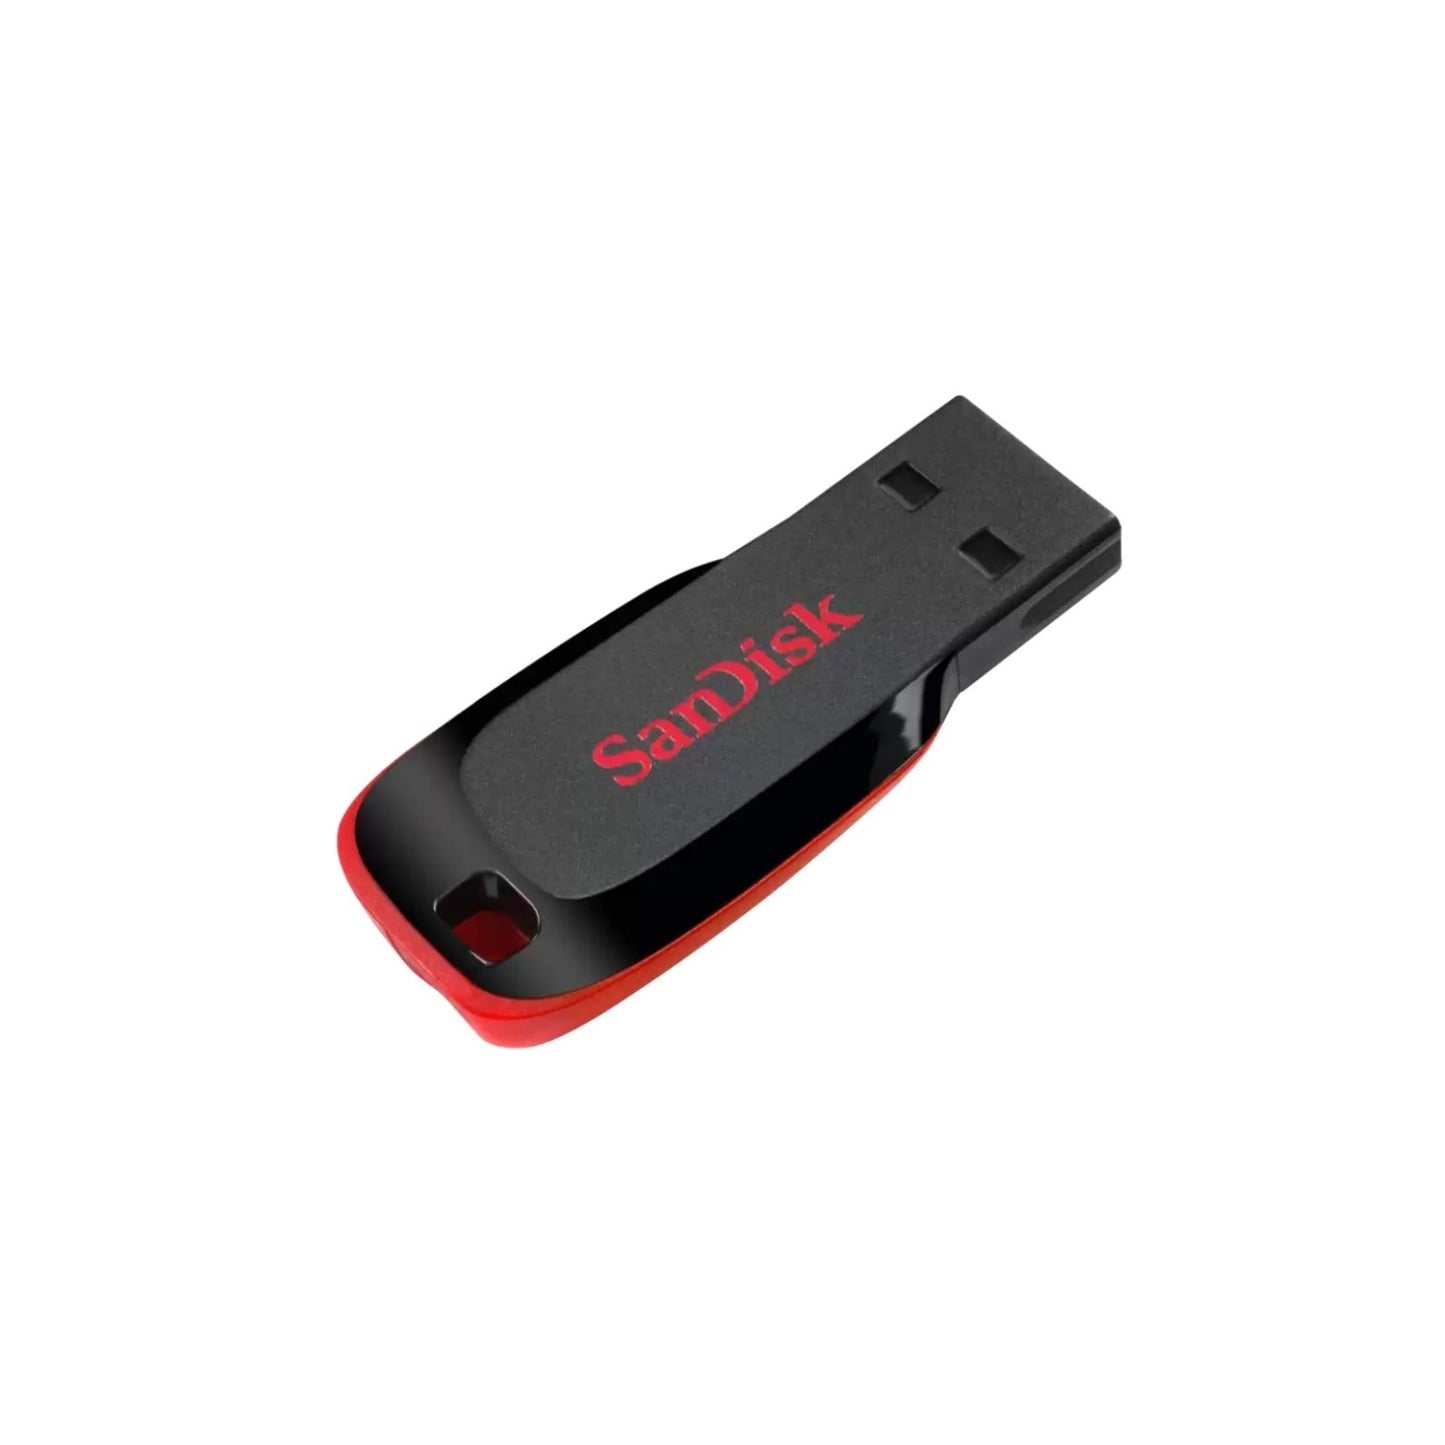 SanDisk Cruzer Blade 16GB 32GB 64GB 128GB USB 2.0 Flash Drive Memory Pen PC MAC